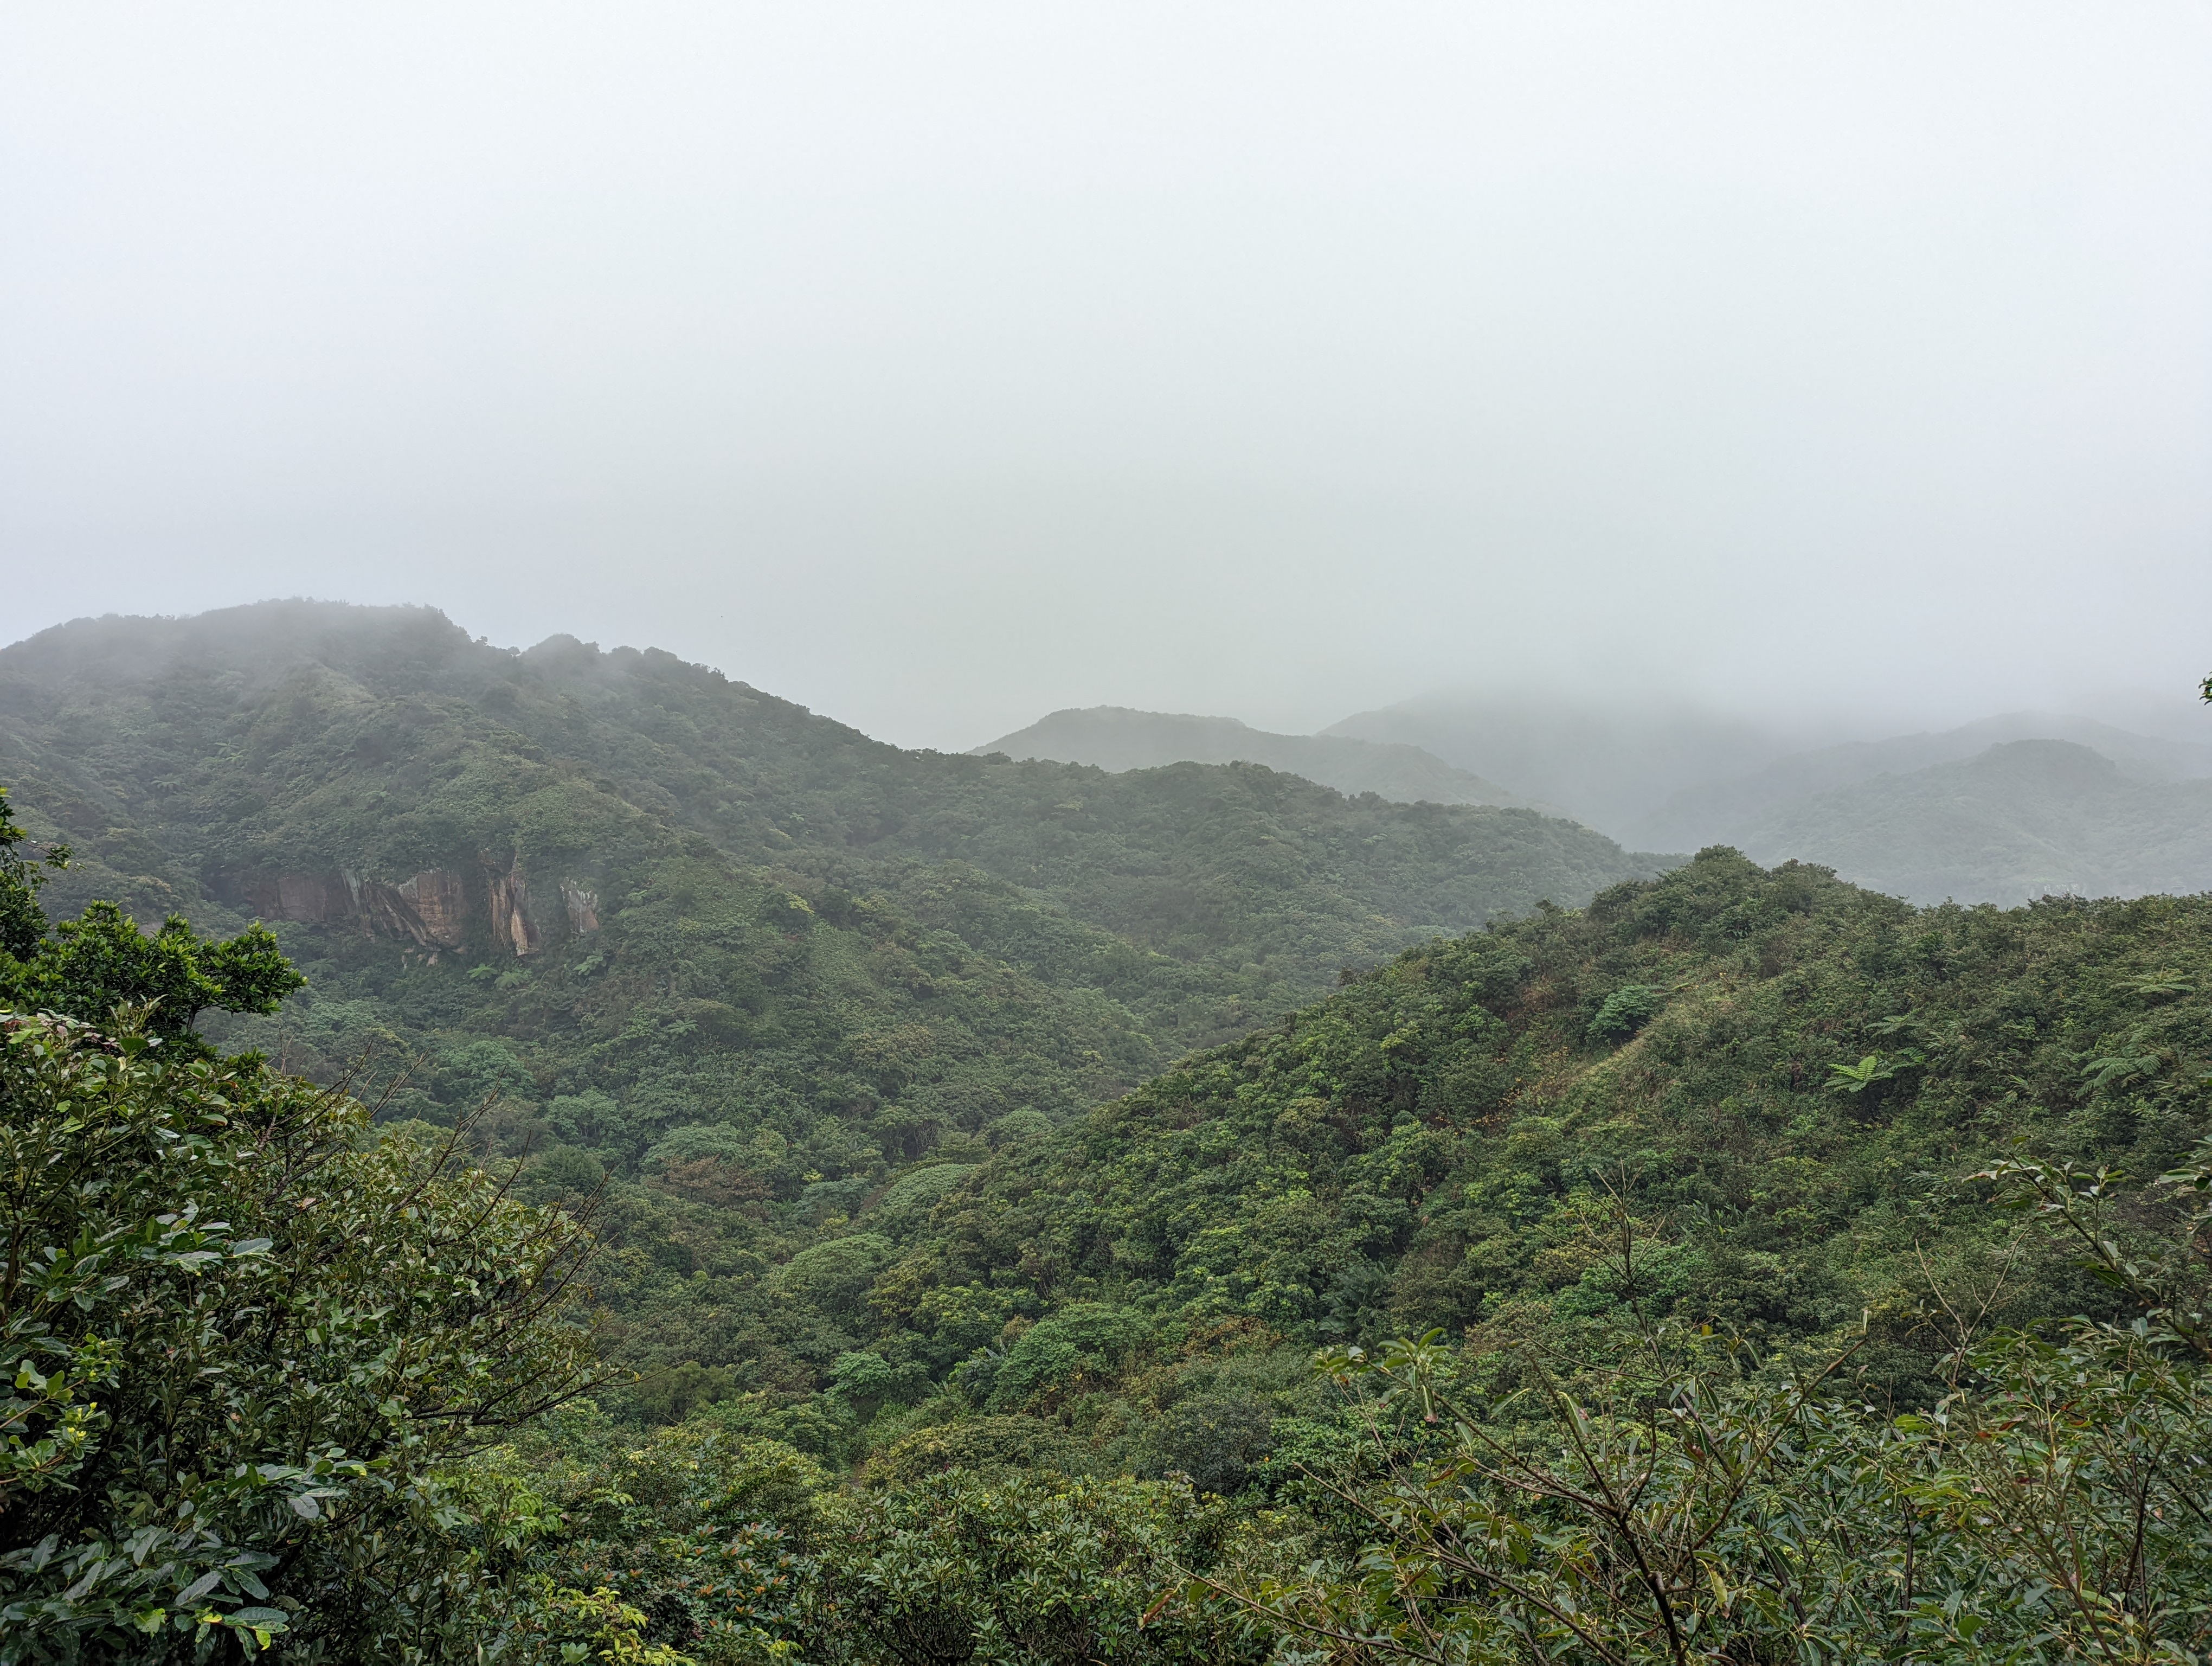 A photo of some lush green terrain, shrouded in fog.